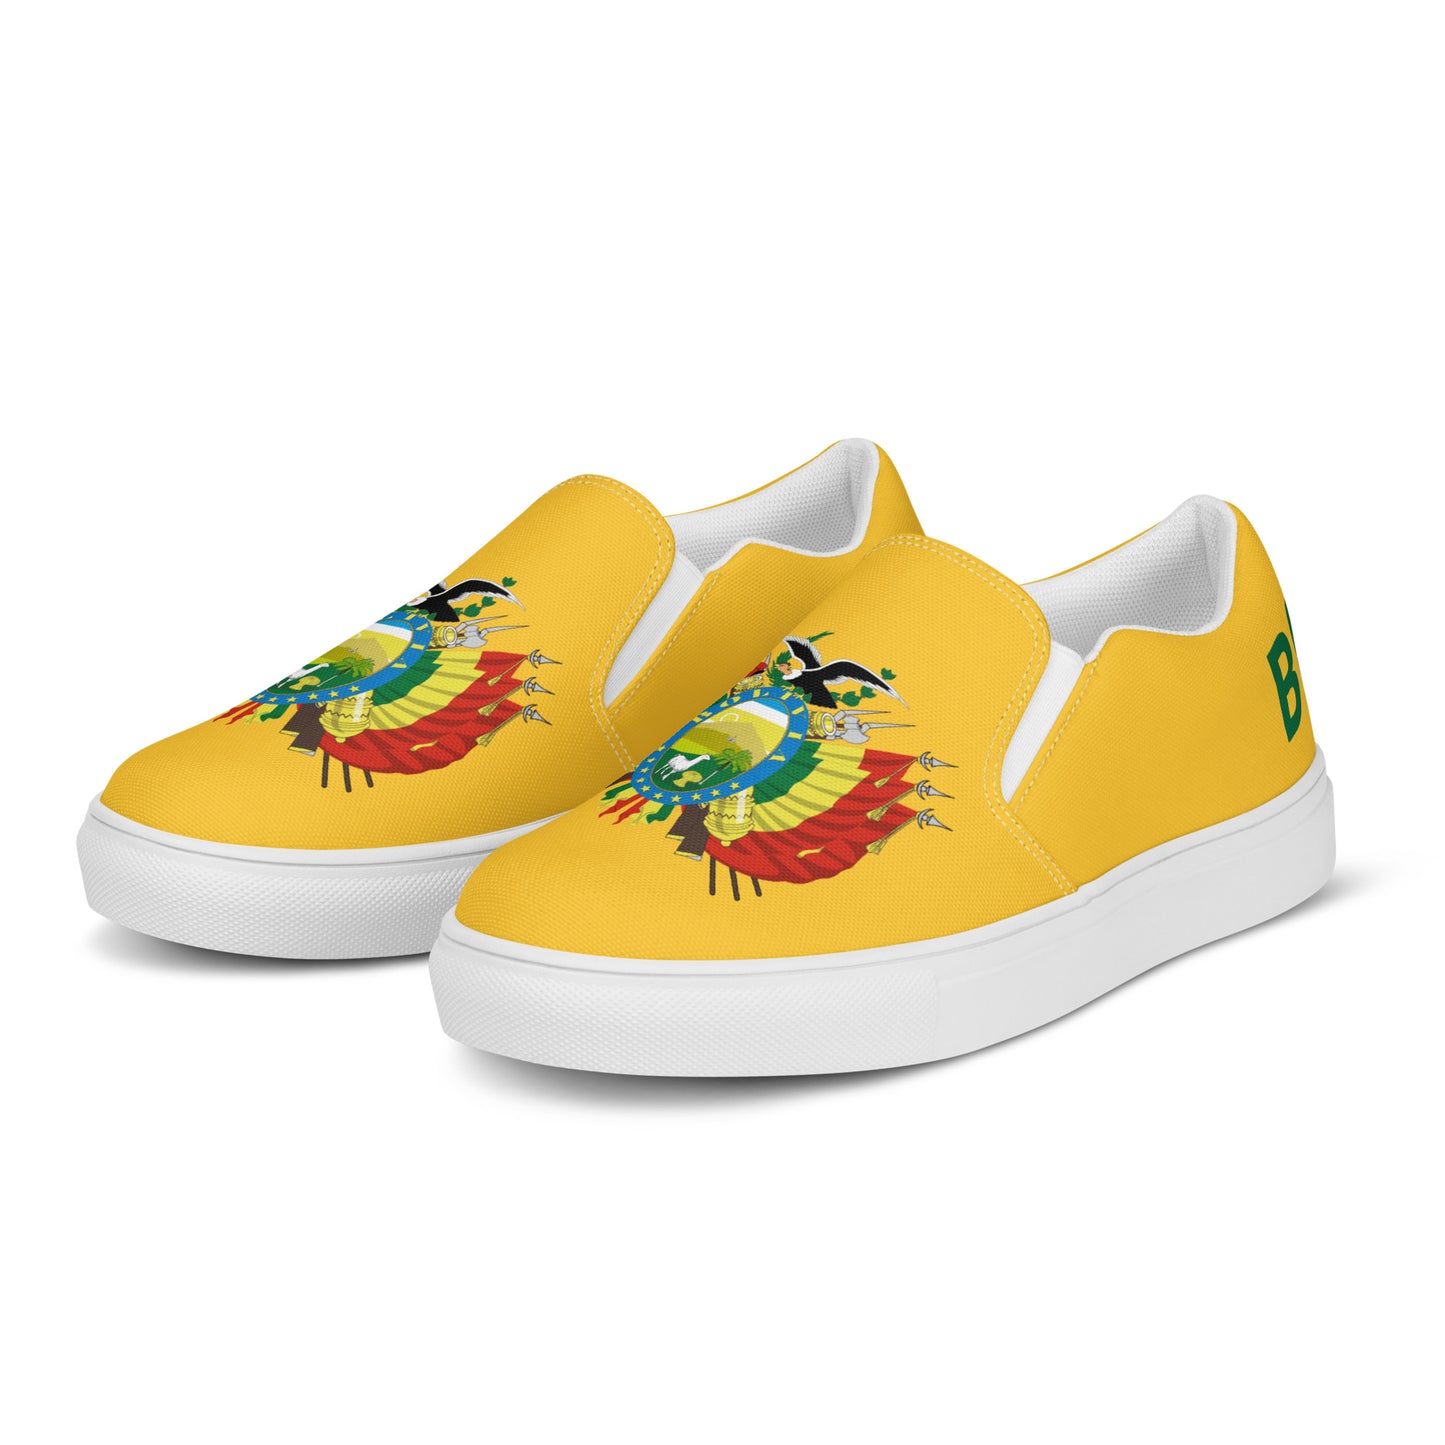 Bolivia - Hombre - Amarillo - Zapatos Slip-on